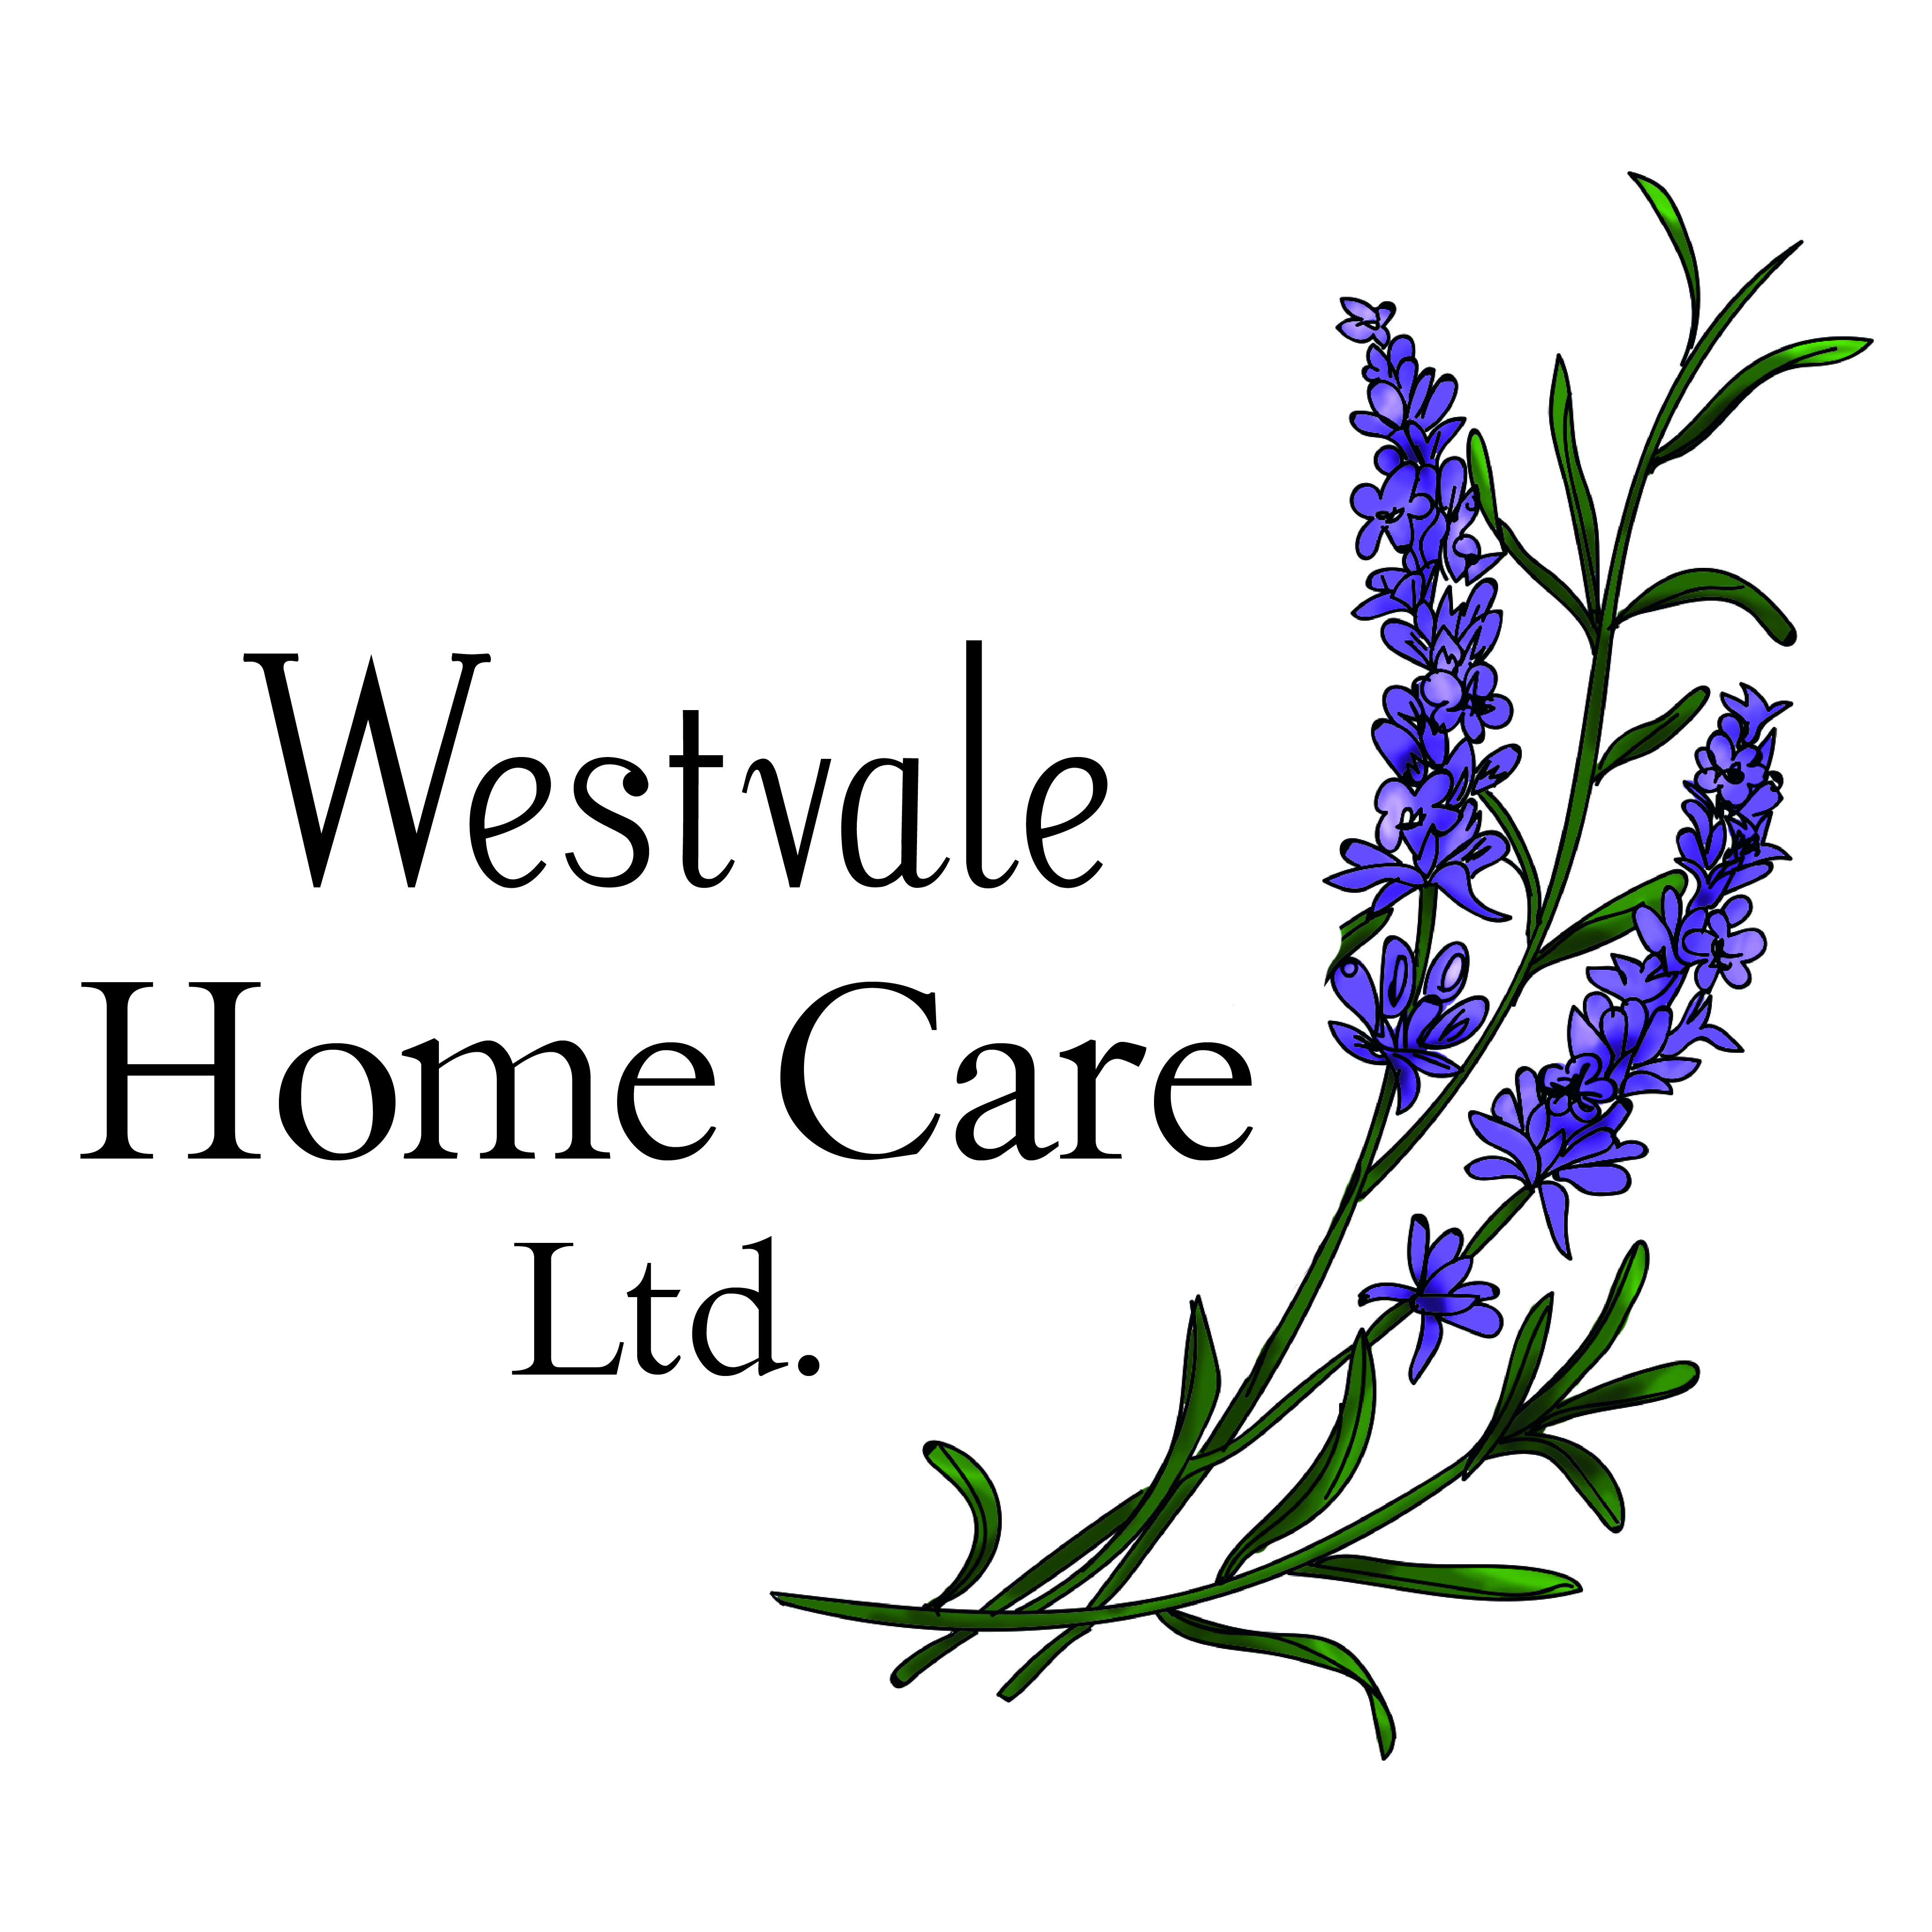 Westvale Home Care